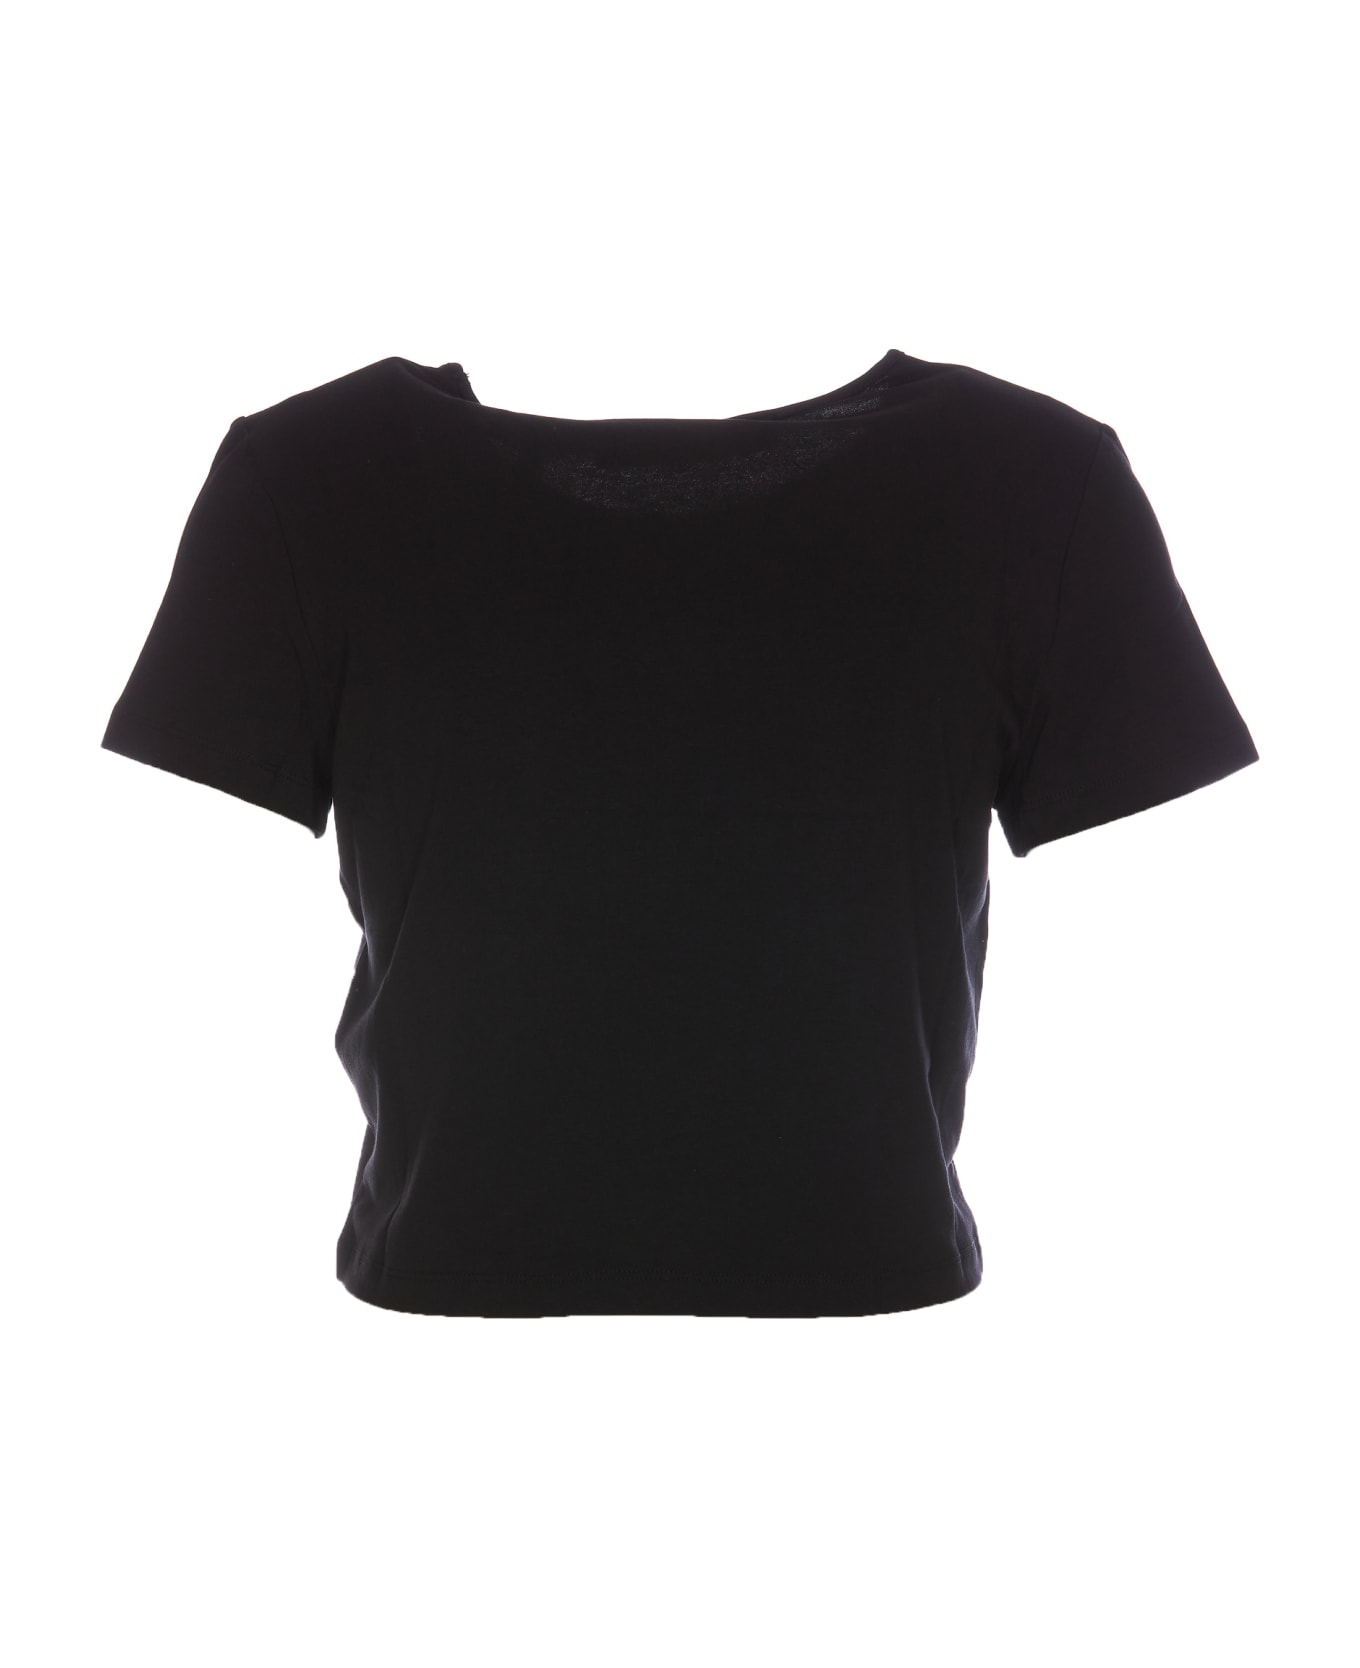 Rotate by Birger Christensen Logo T-shirt - Black